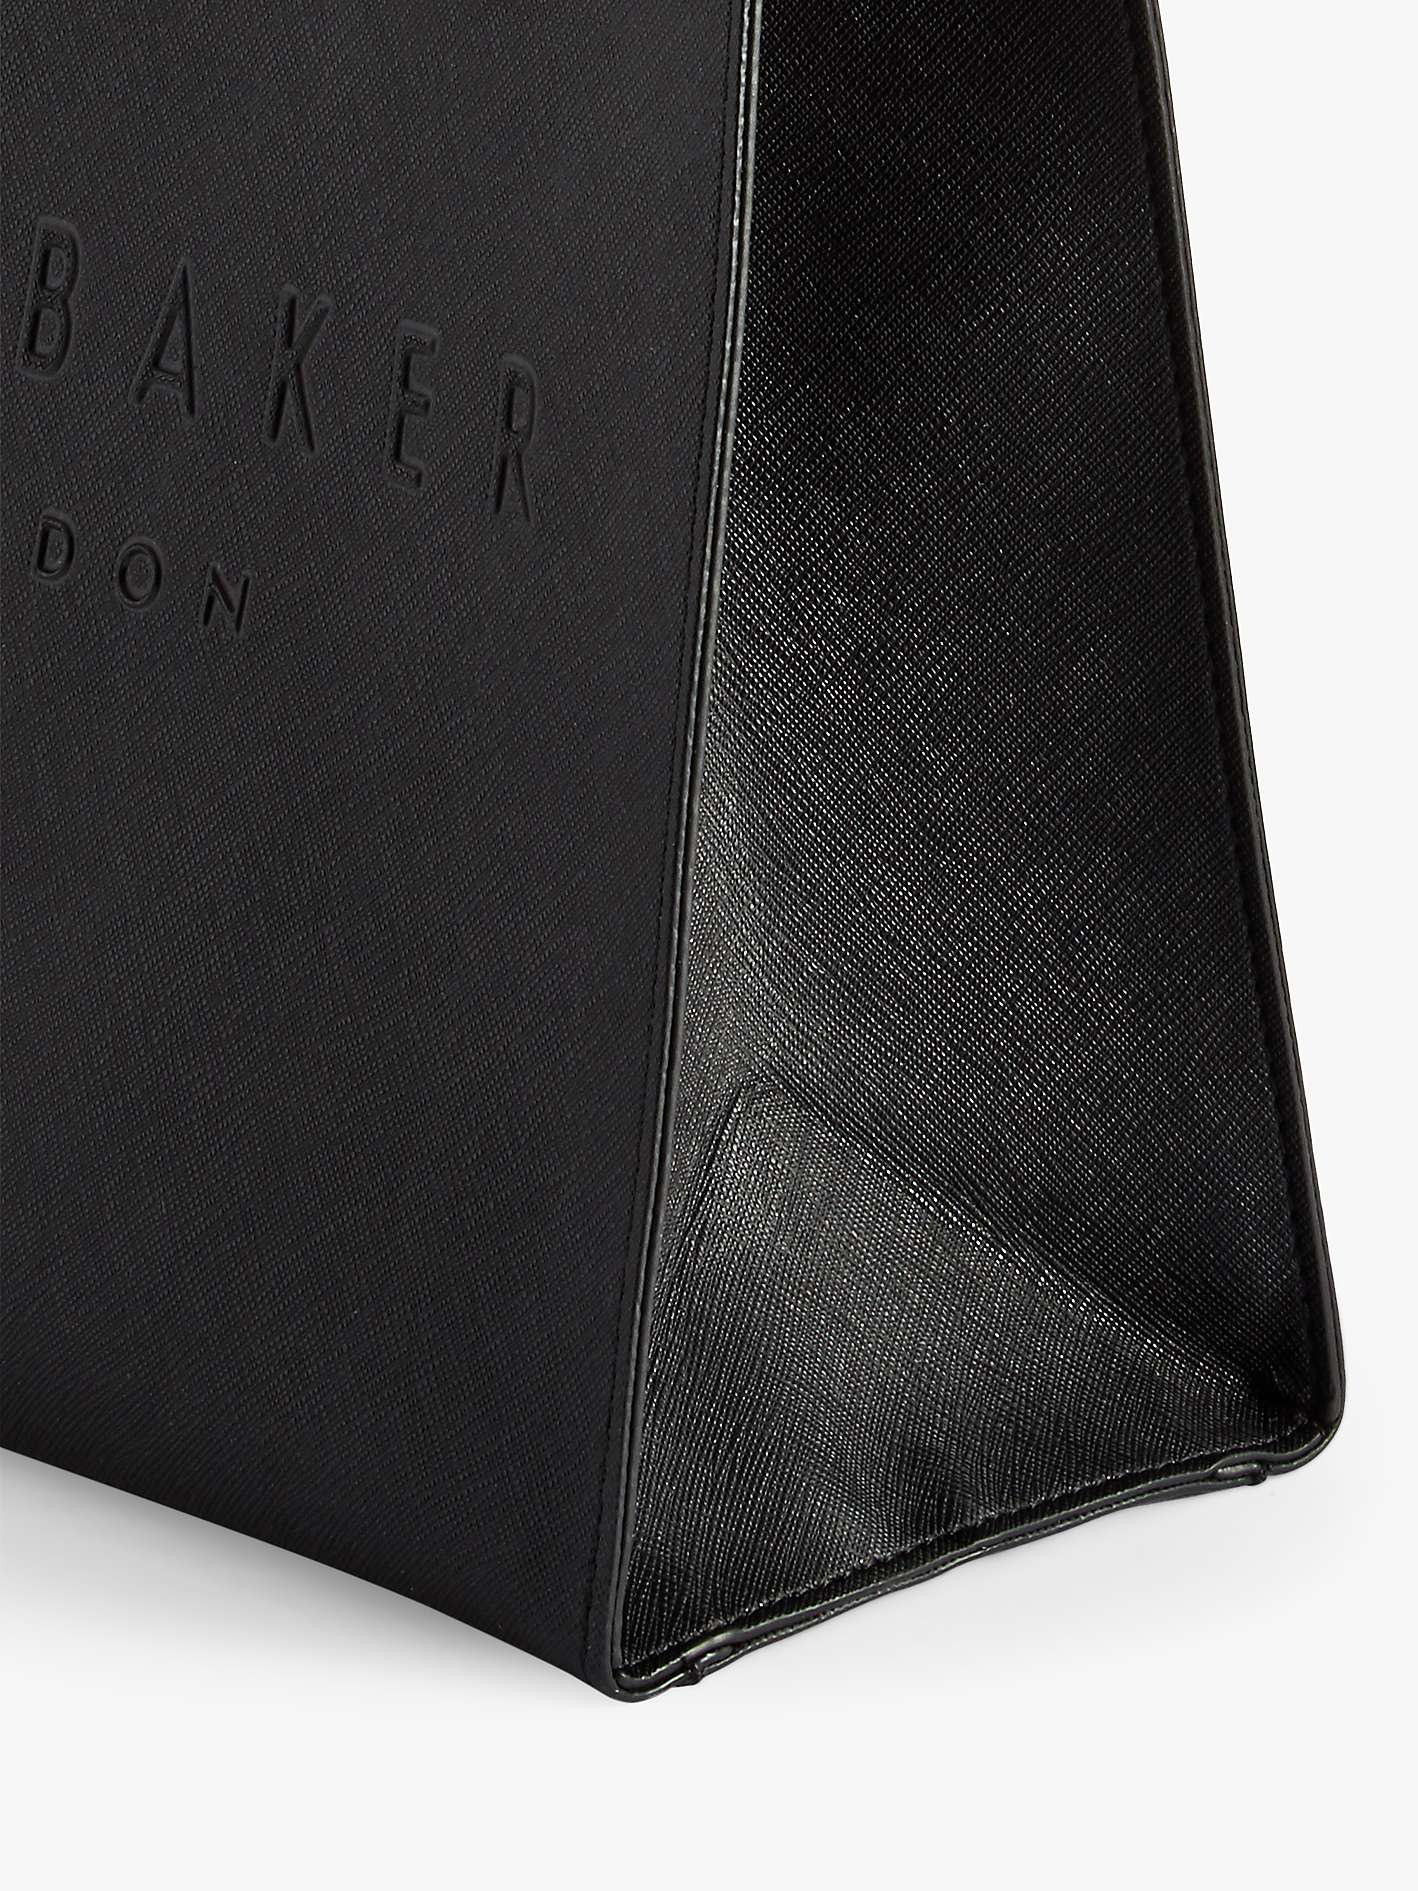 Buy Ted Baker Seacon Shopper Bag Online at johnlewis.com